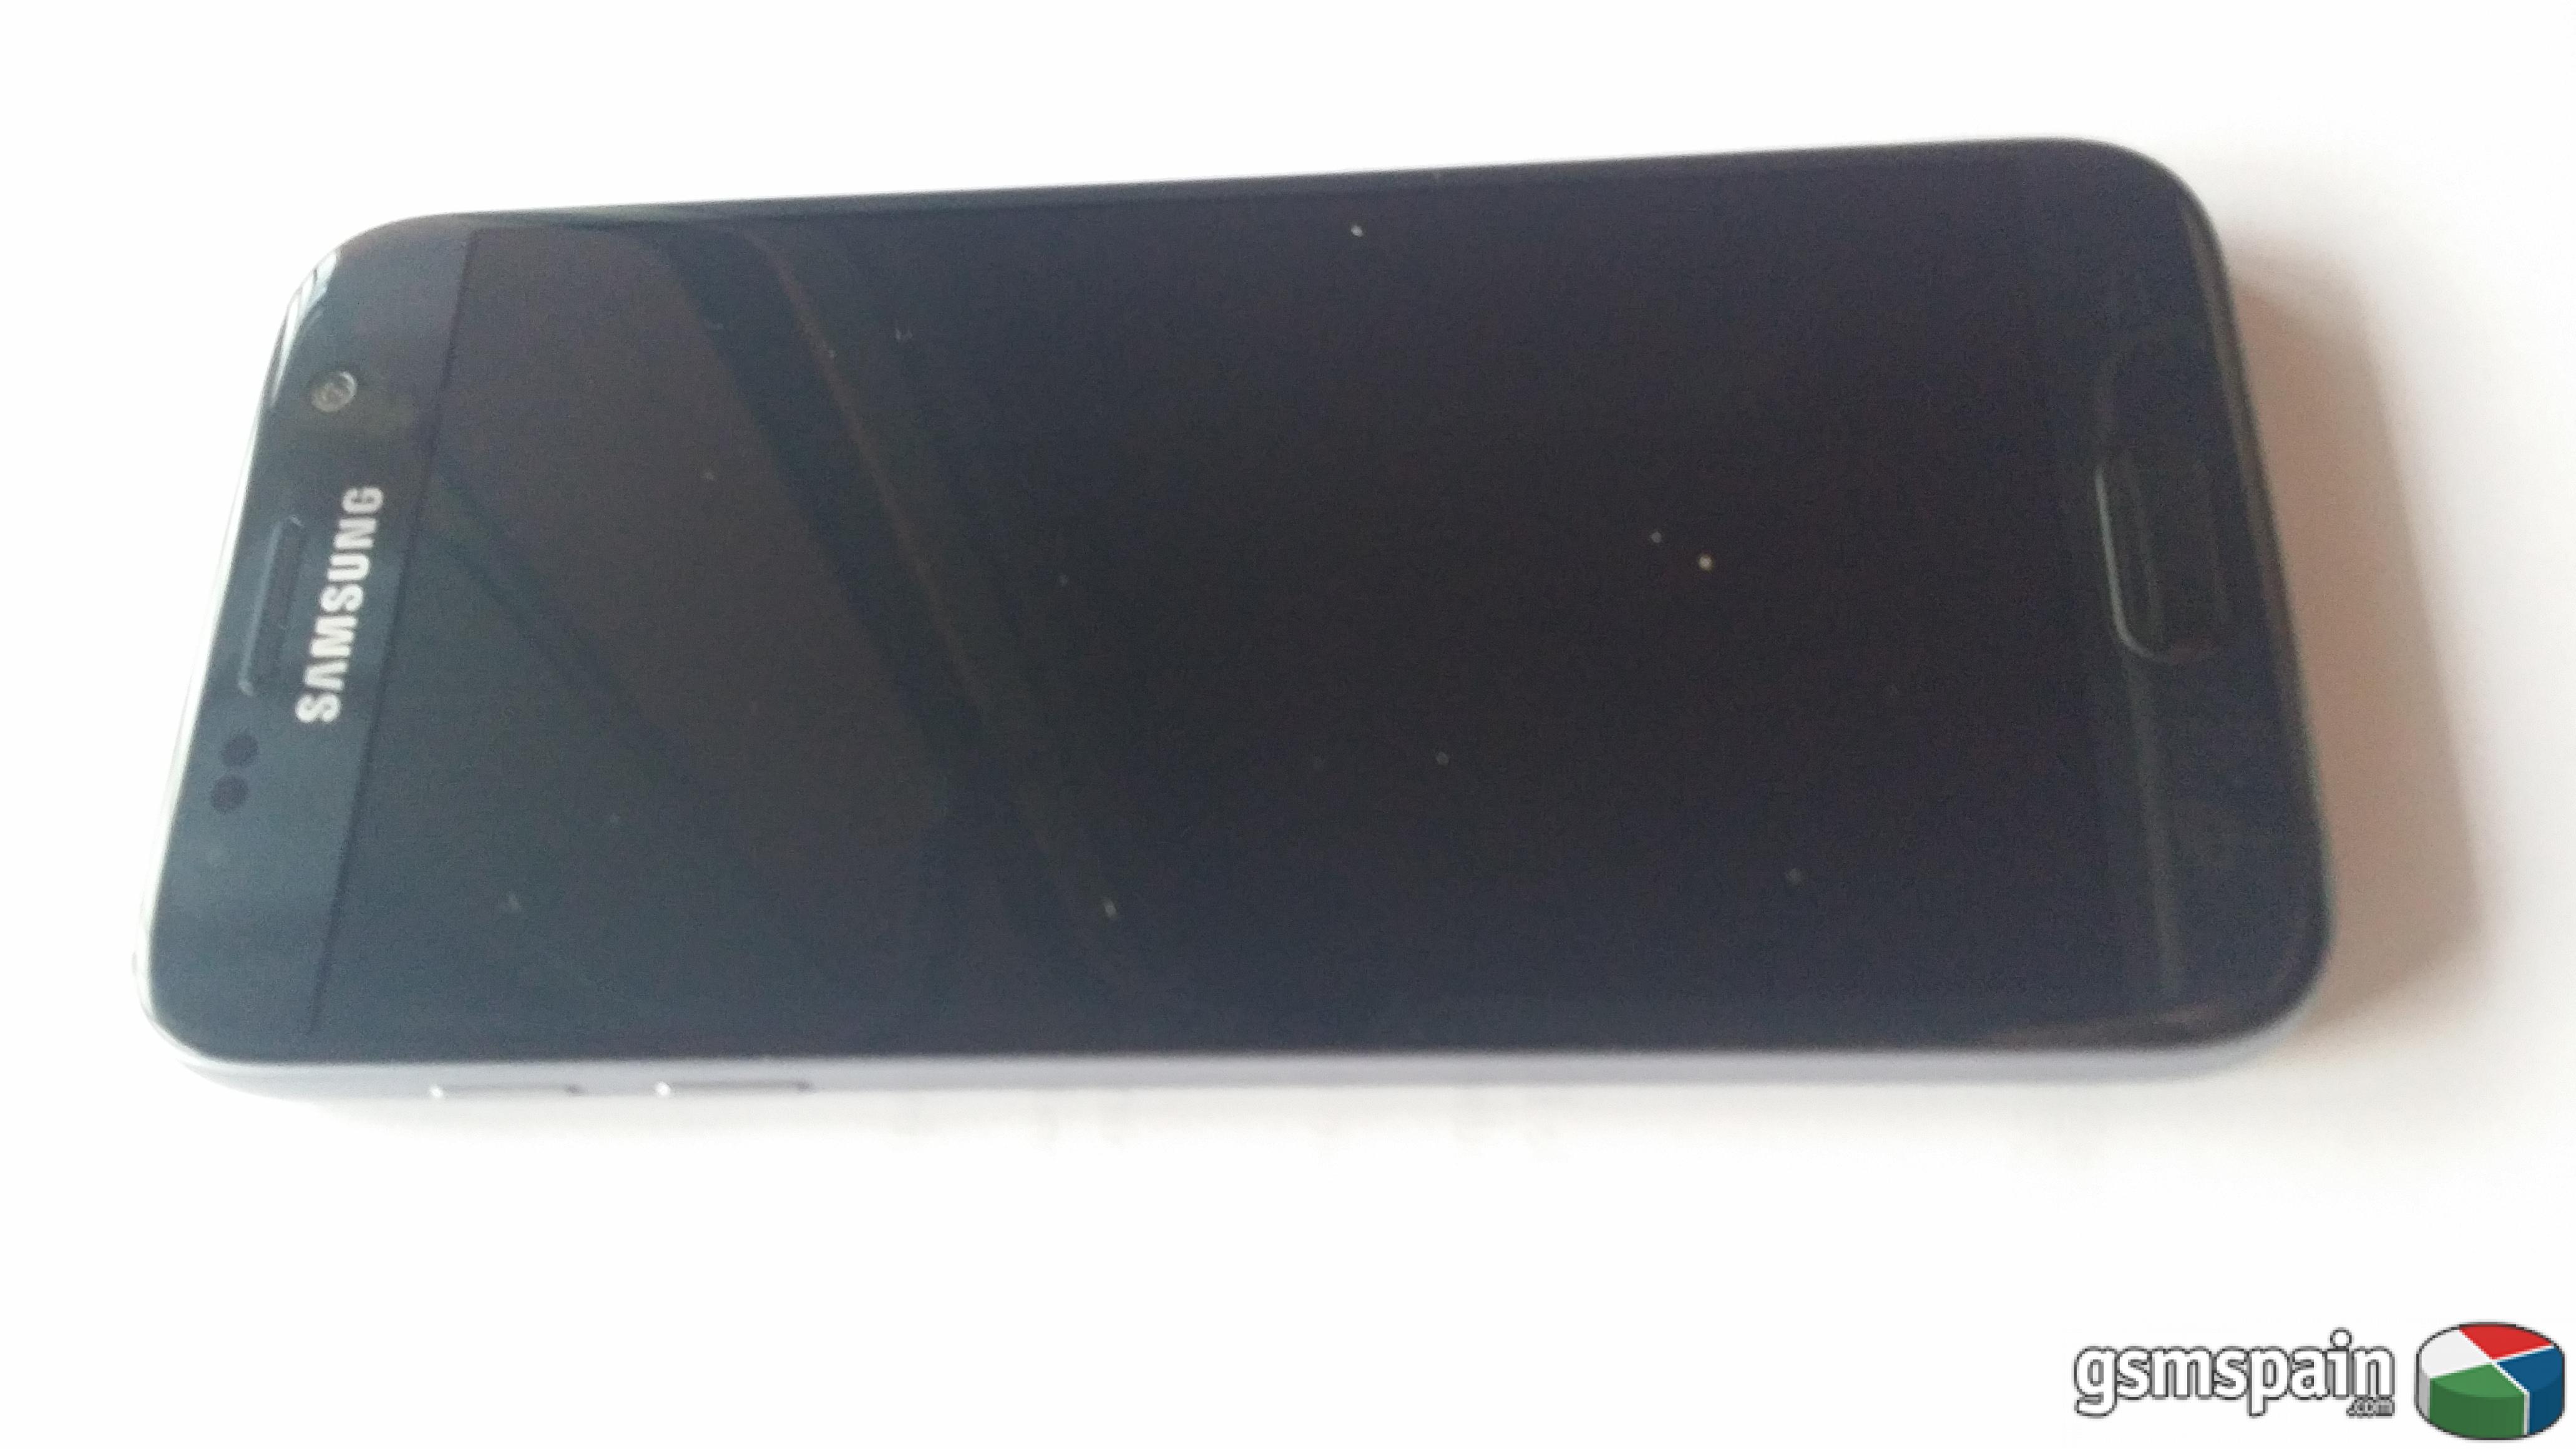 [VENDO] Samsung galaxy s7 black 32gb